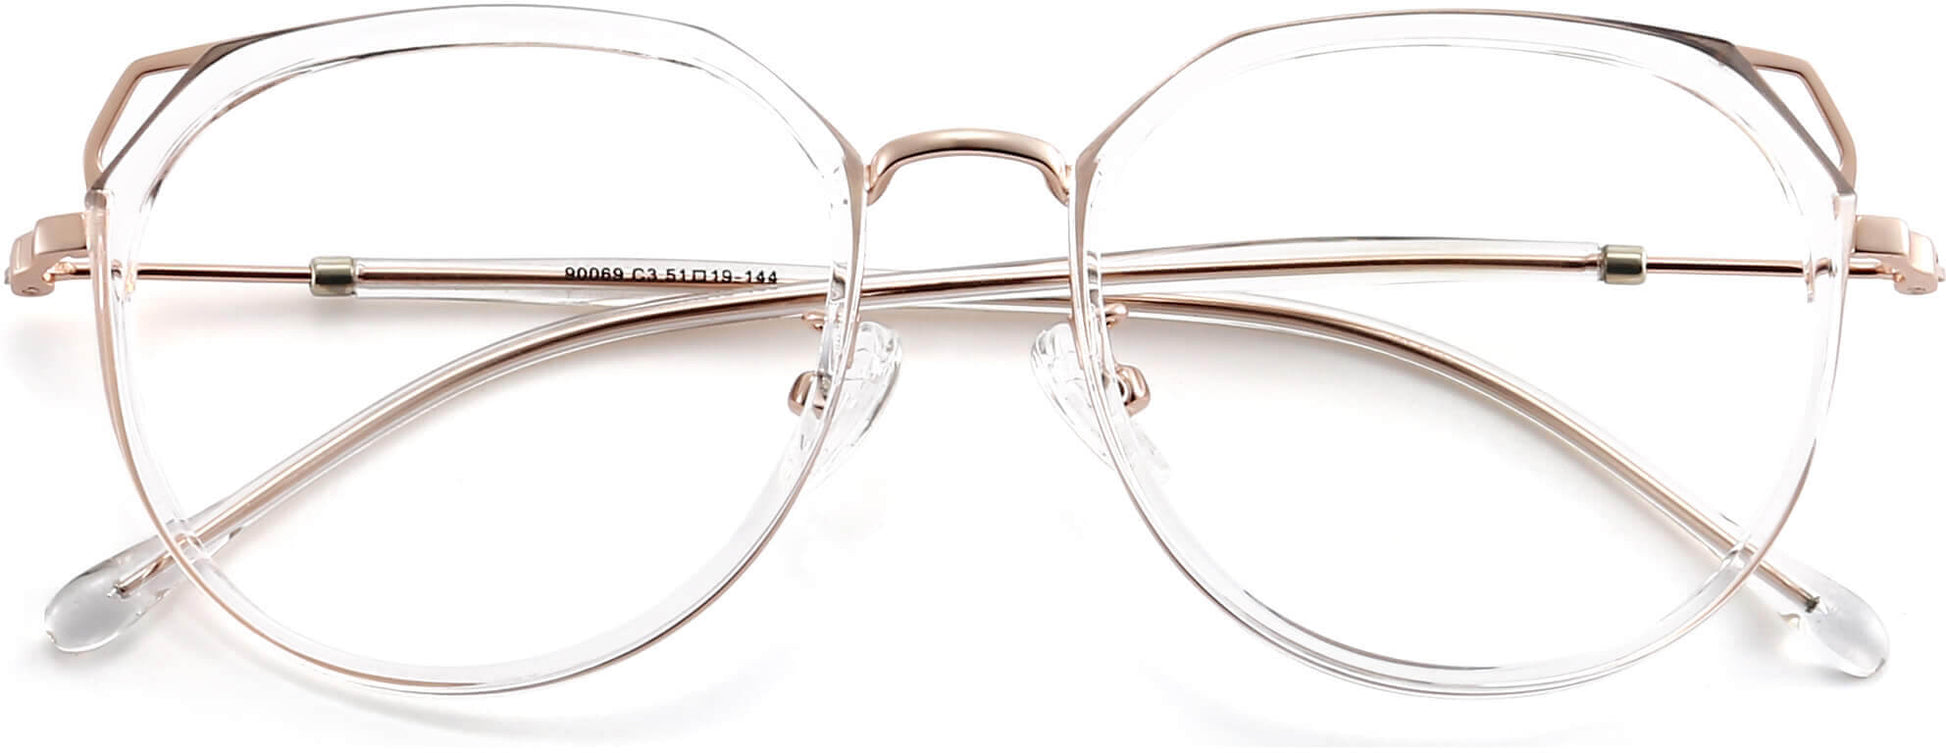 Cynthia Cateye Clear Eyeglasses rom ANRRI, closed view